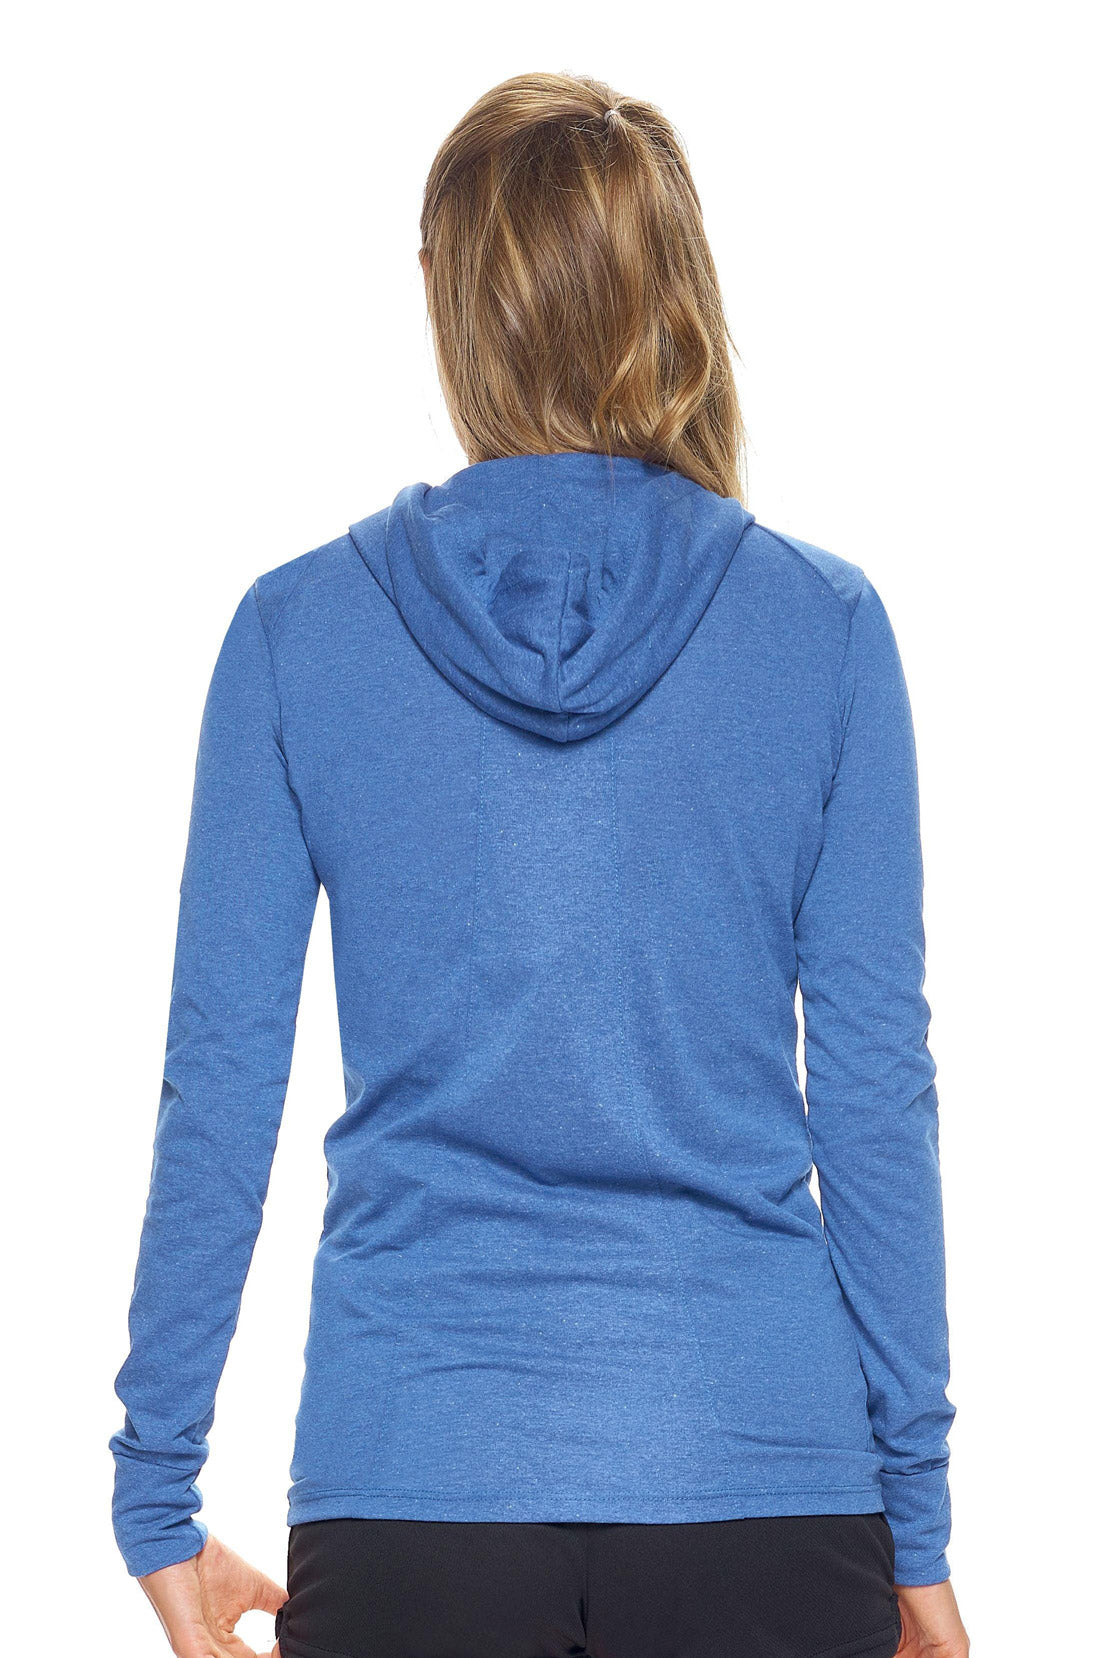 Expert Brand Wholesale Women's Hoodie Shirt Performance in Dark Heather Royal Blue Image 3#dark-heather-royal